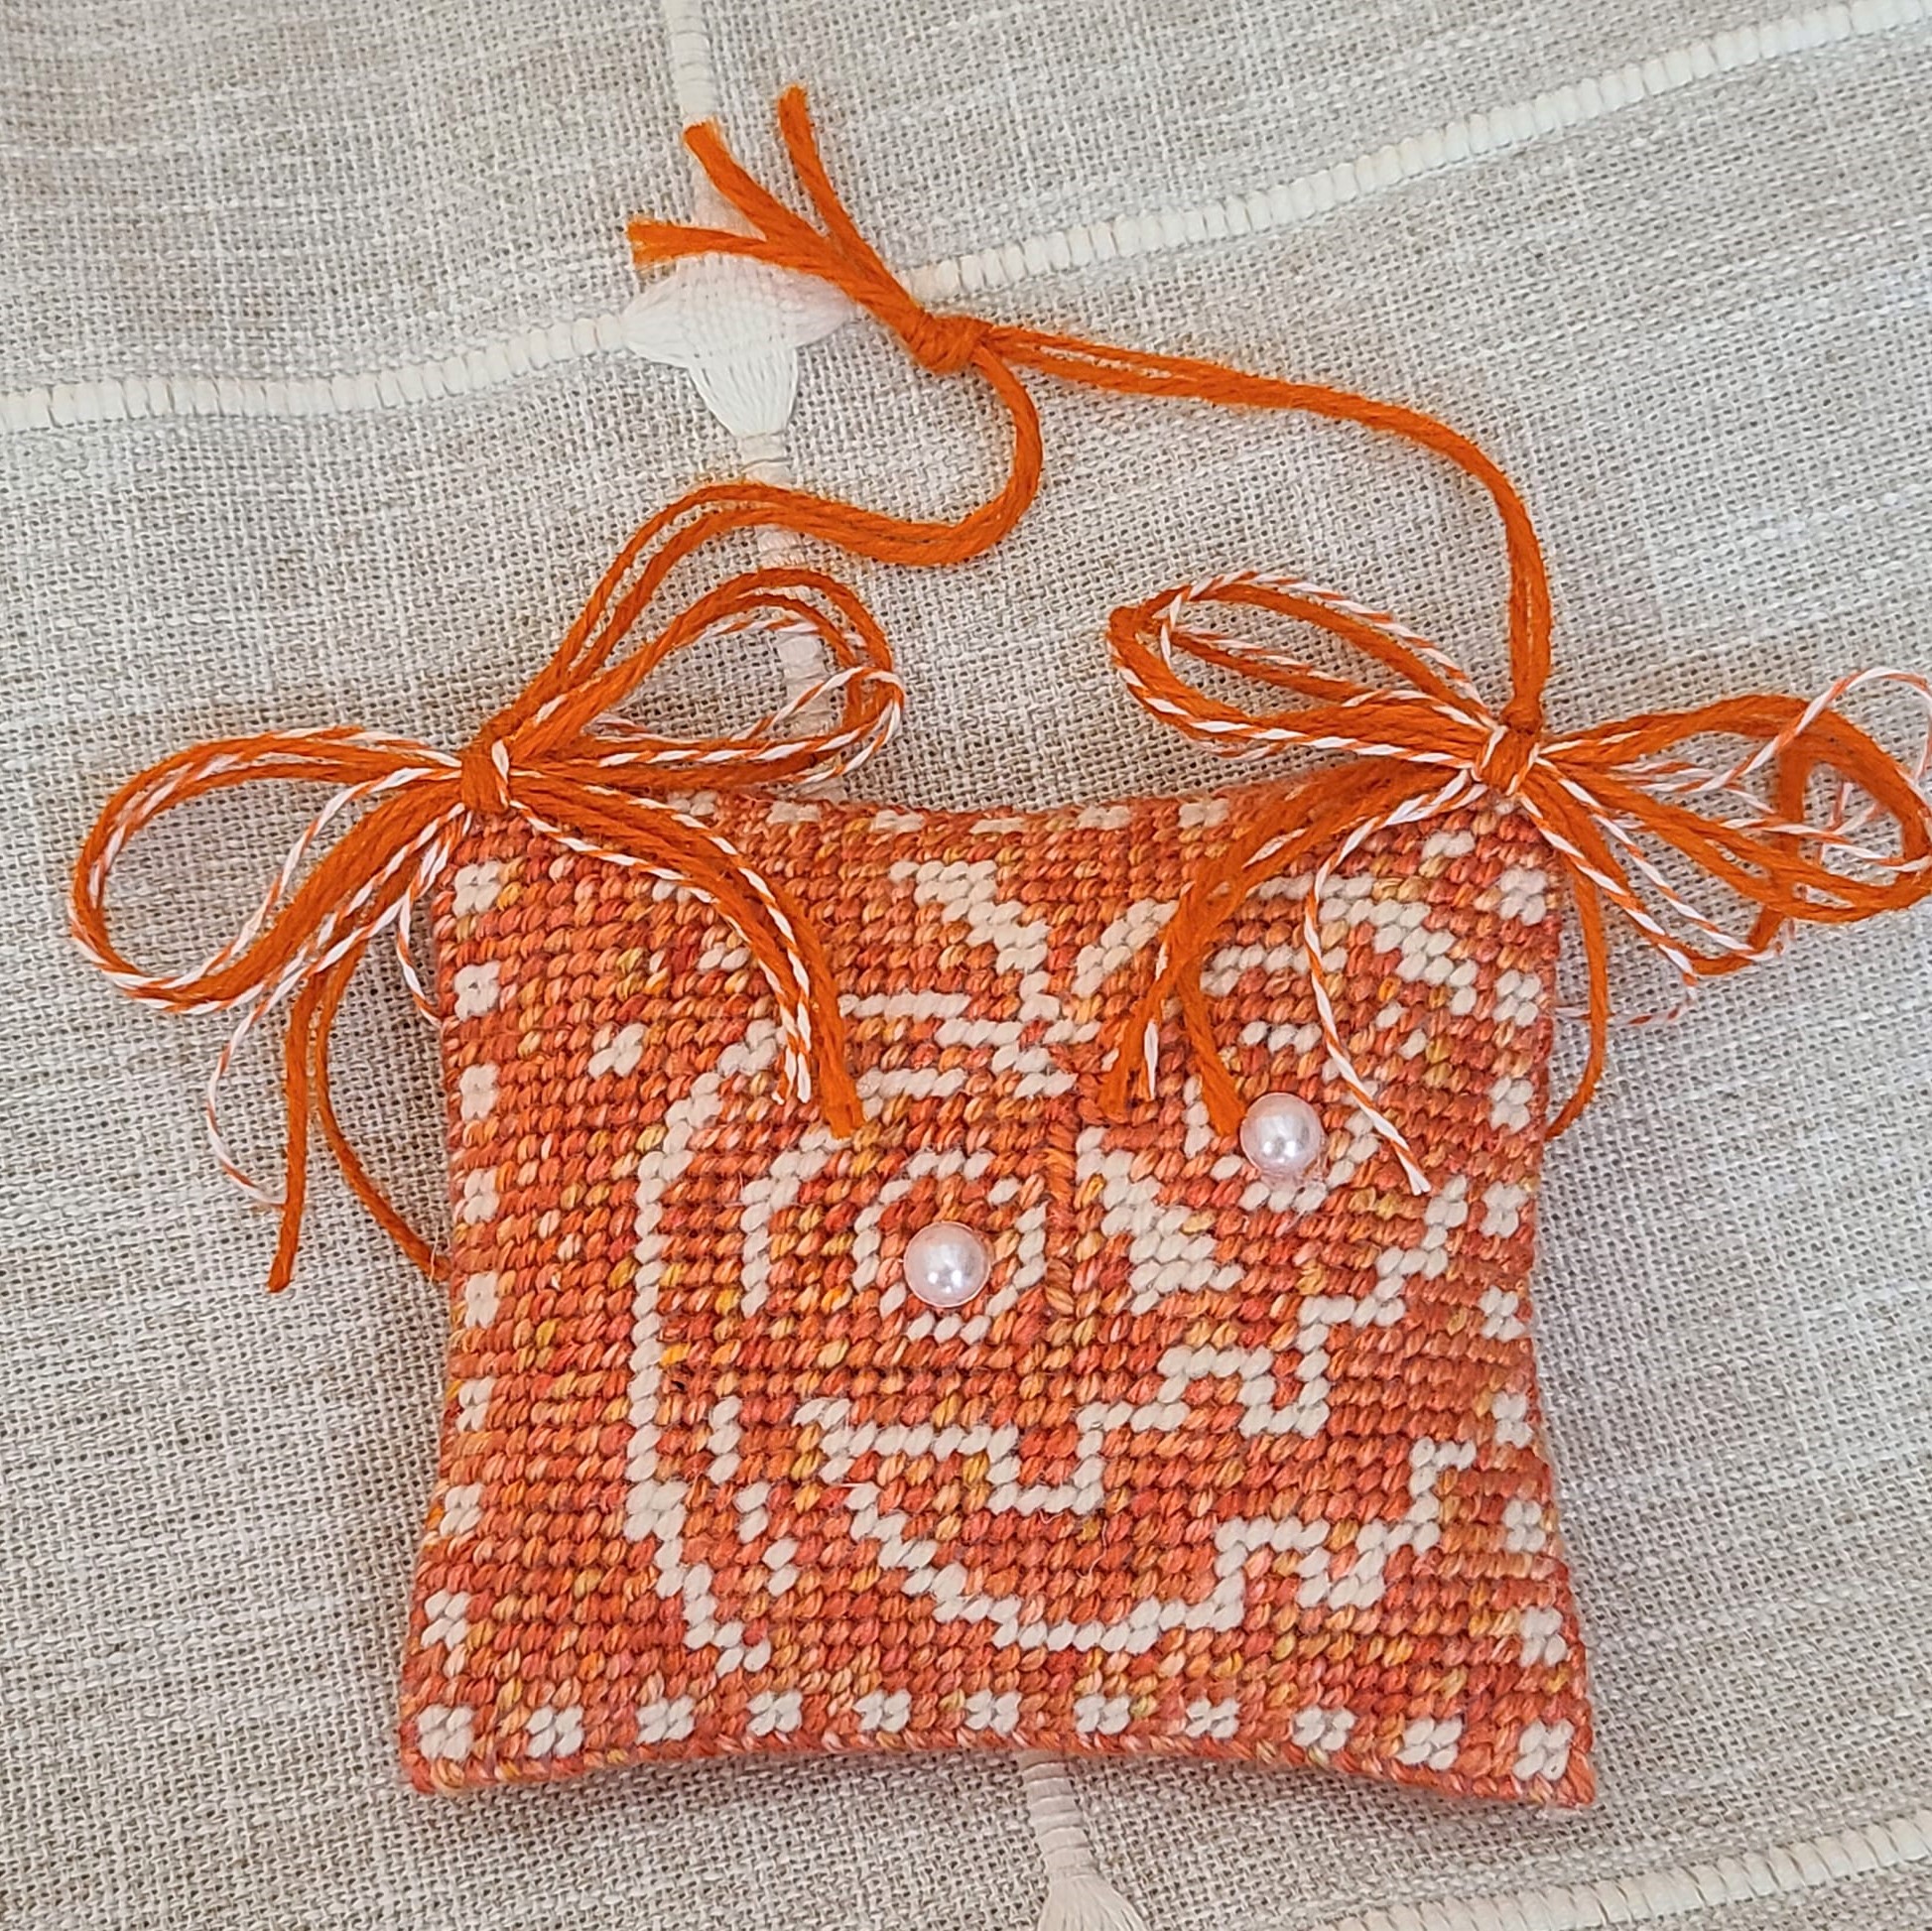 Halloweeen needlepoint pumpkin with pearl eyes ornament